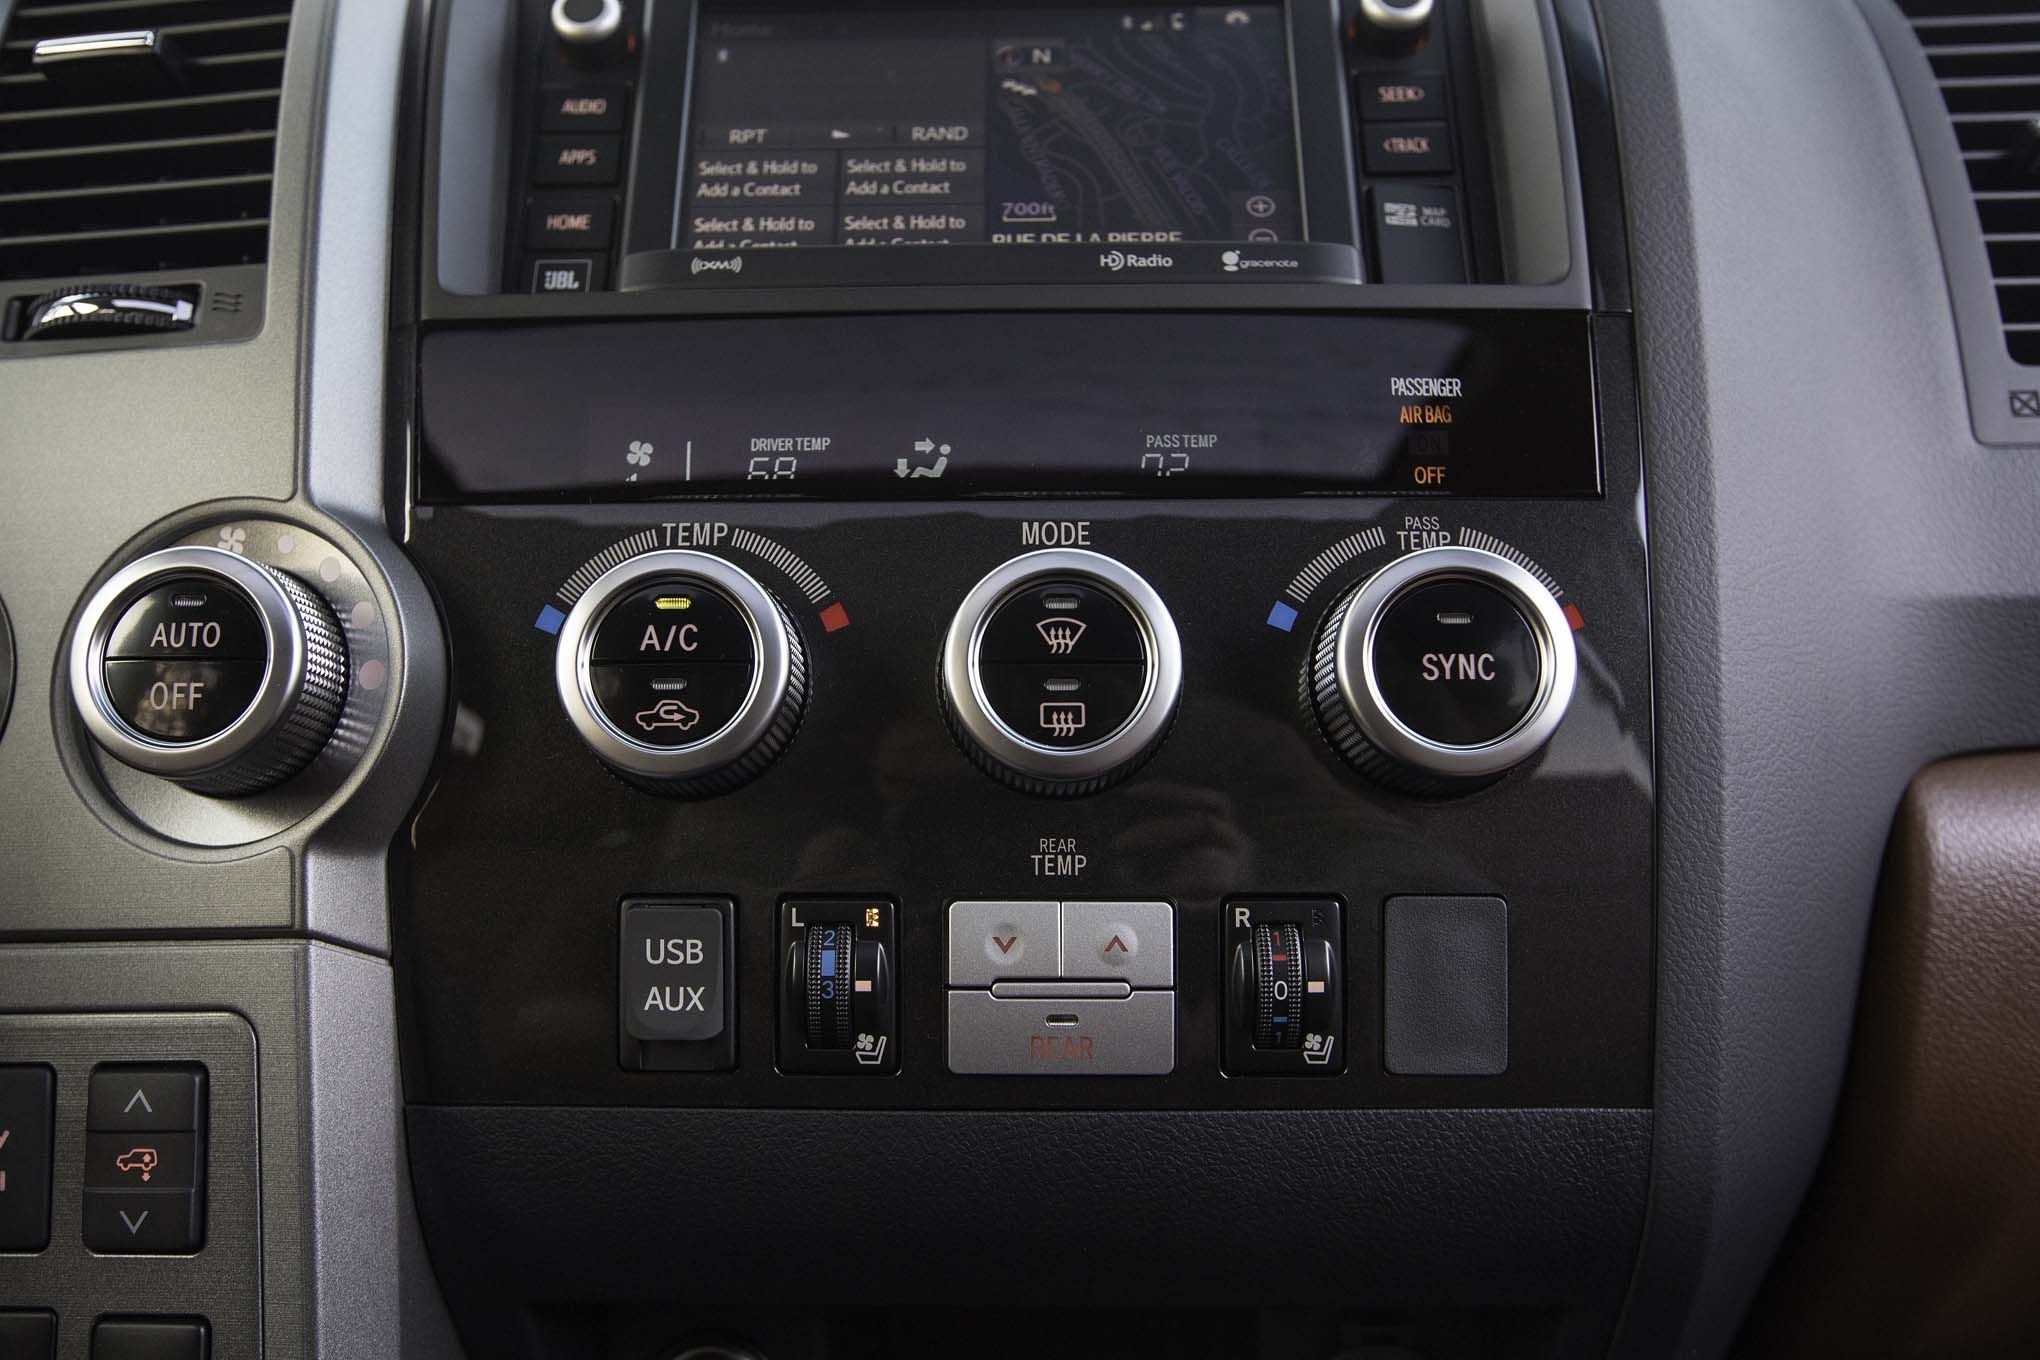 2017 Toyota Sequoia 4×4 Platinum Interior View Climate Control (View 24 of 26)